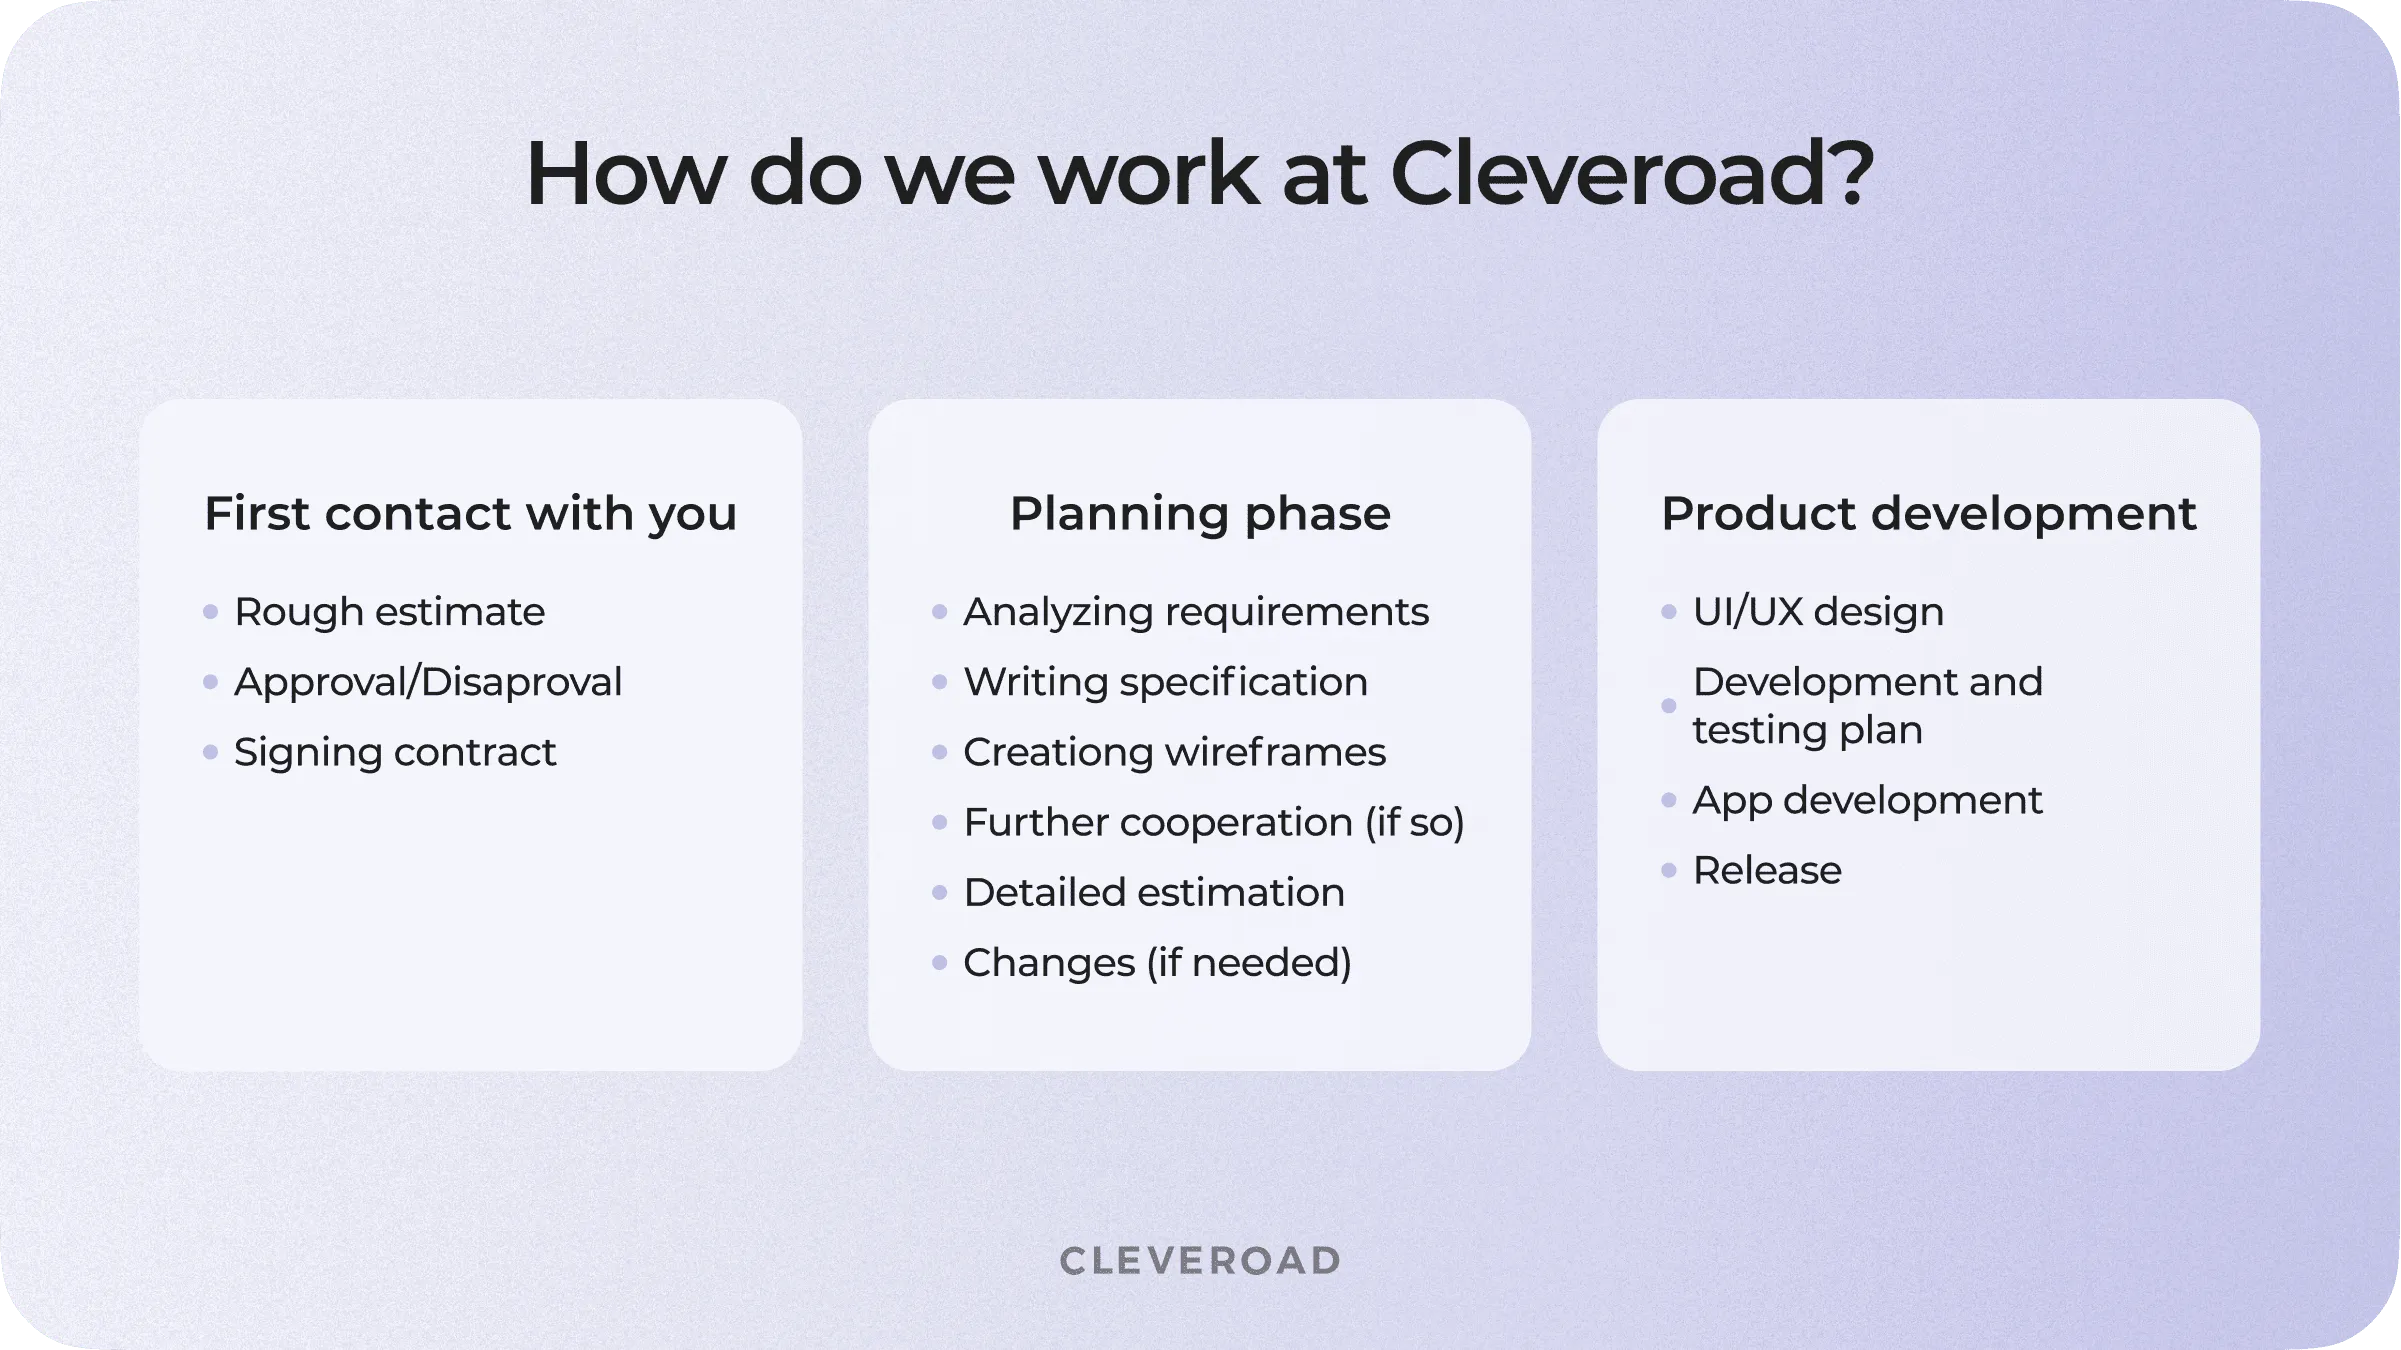 Cleveroad's development process